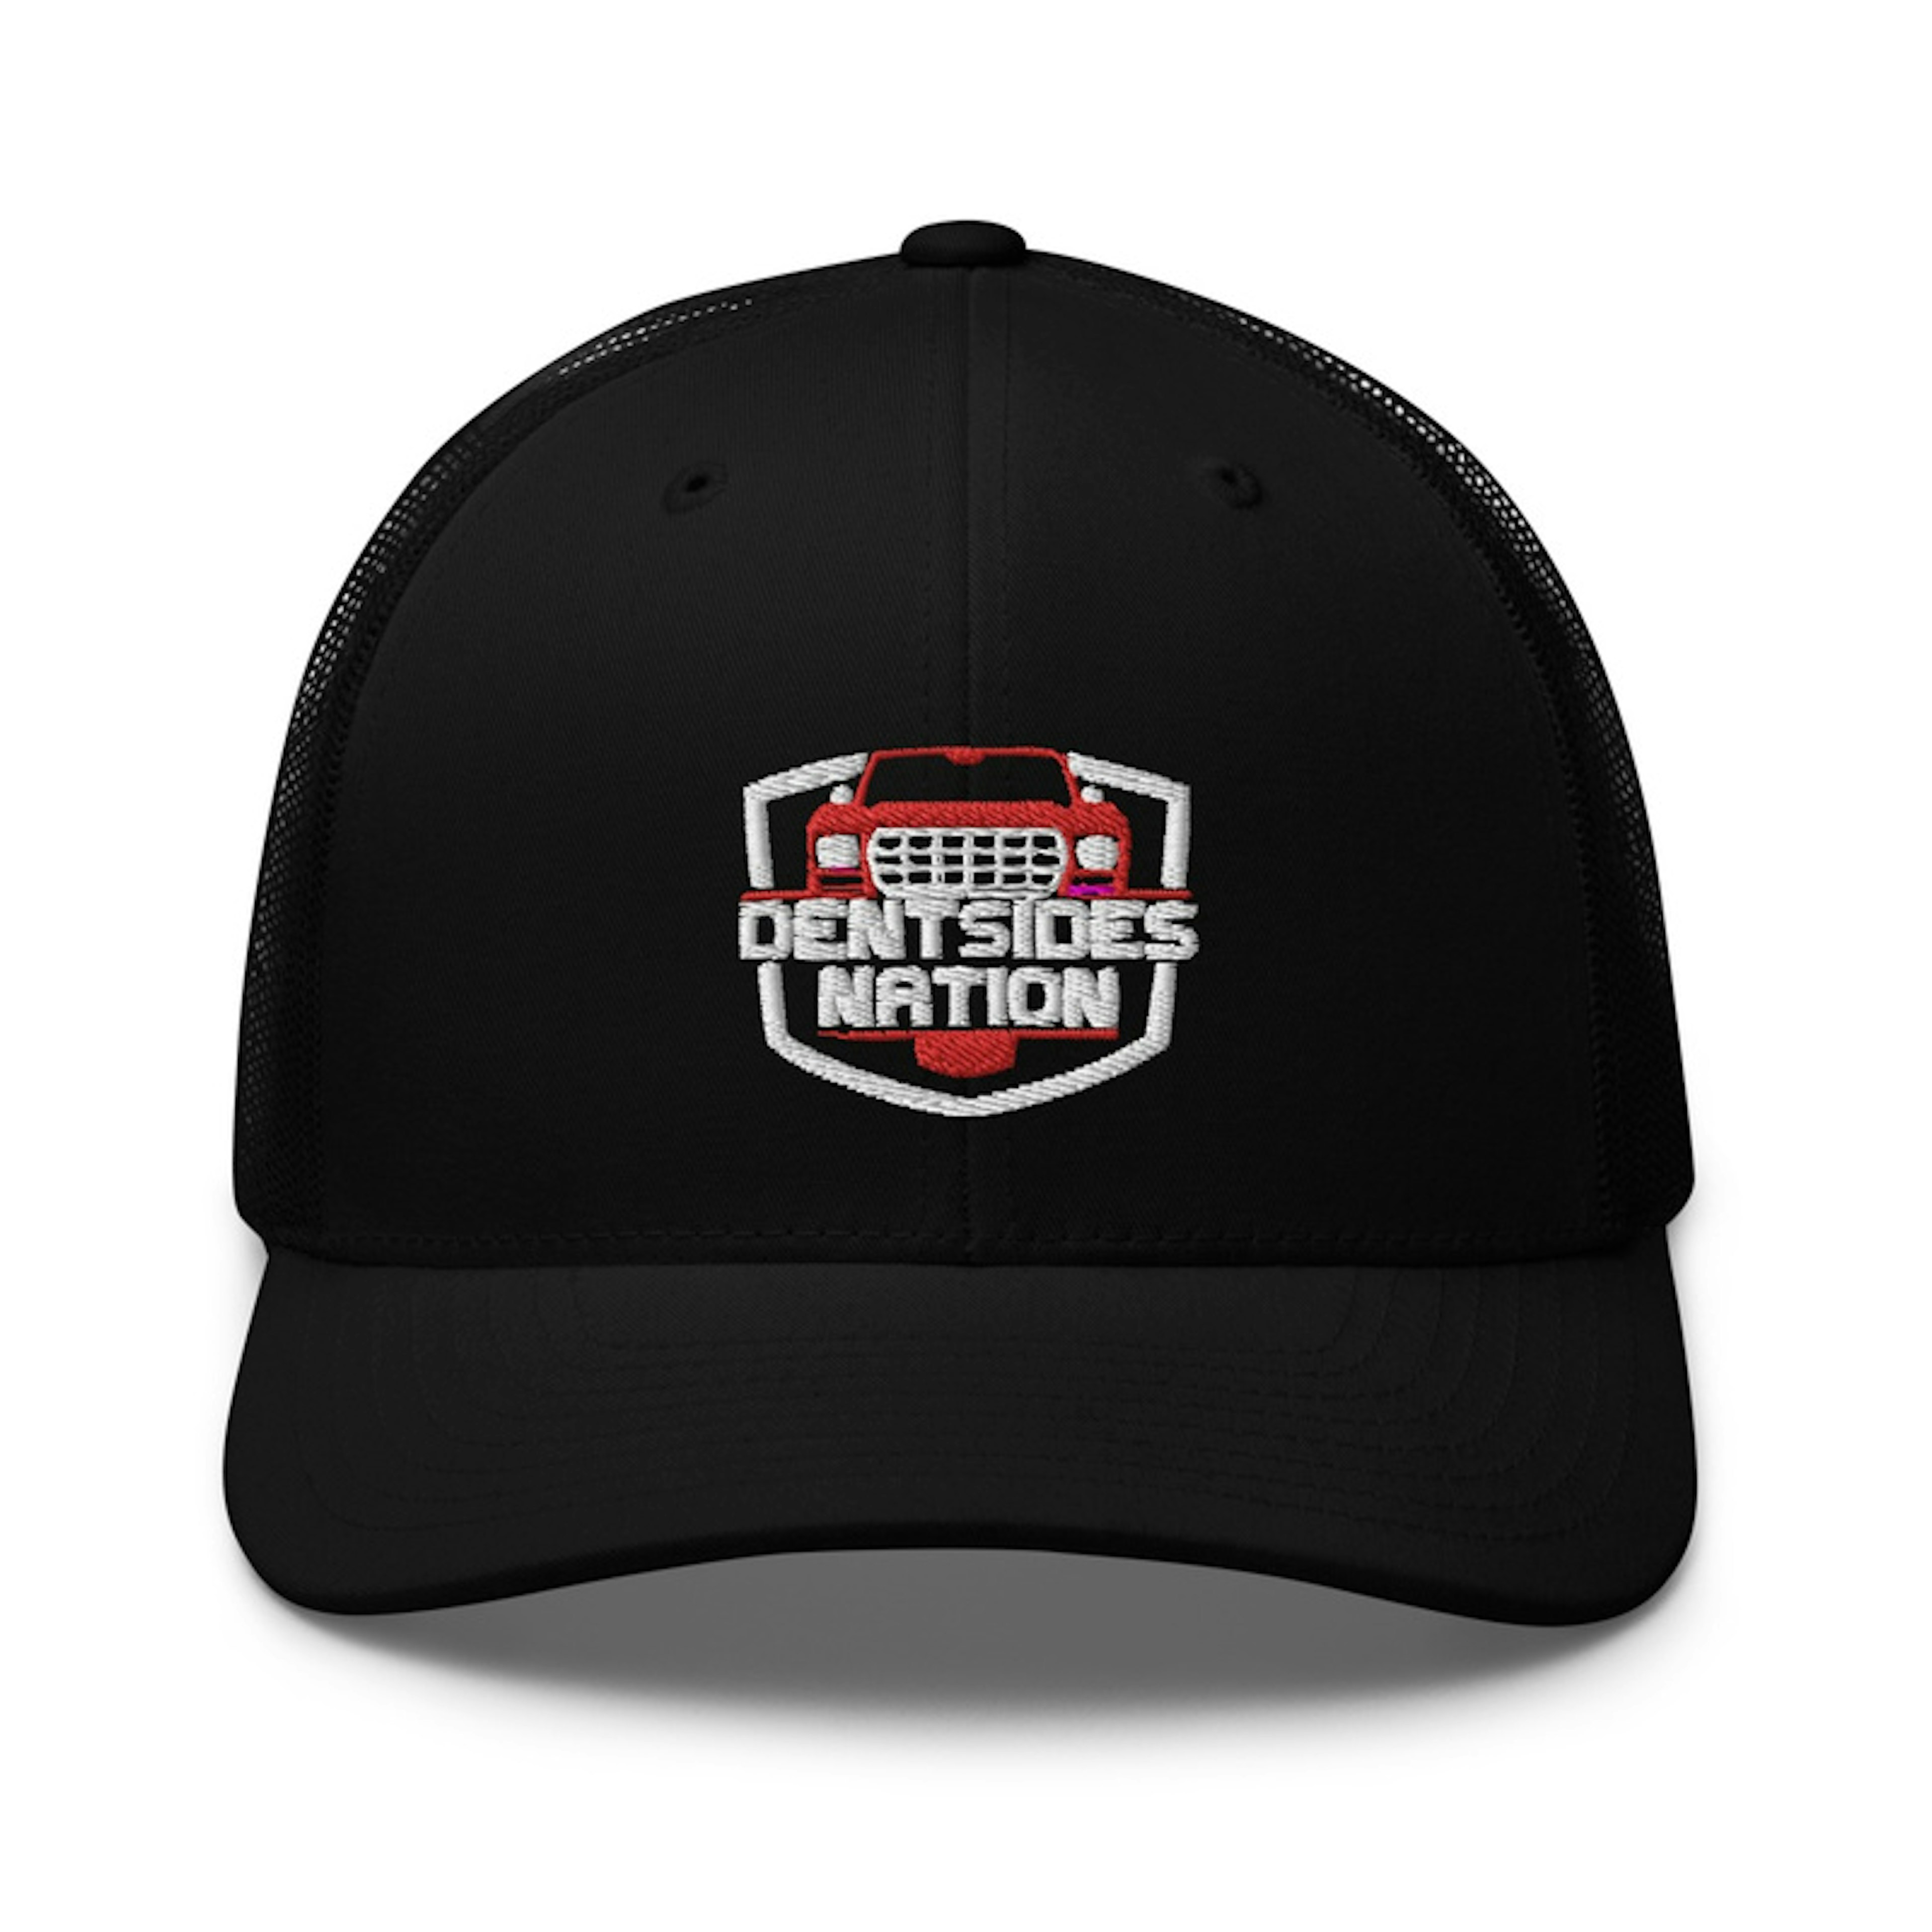 Dentsides Nation Trucker Hat